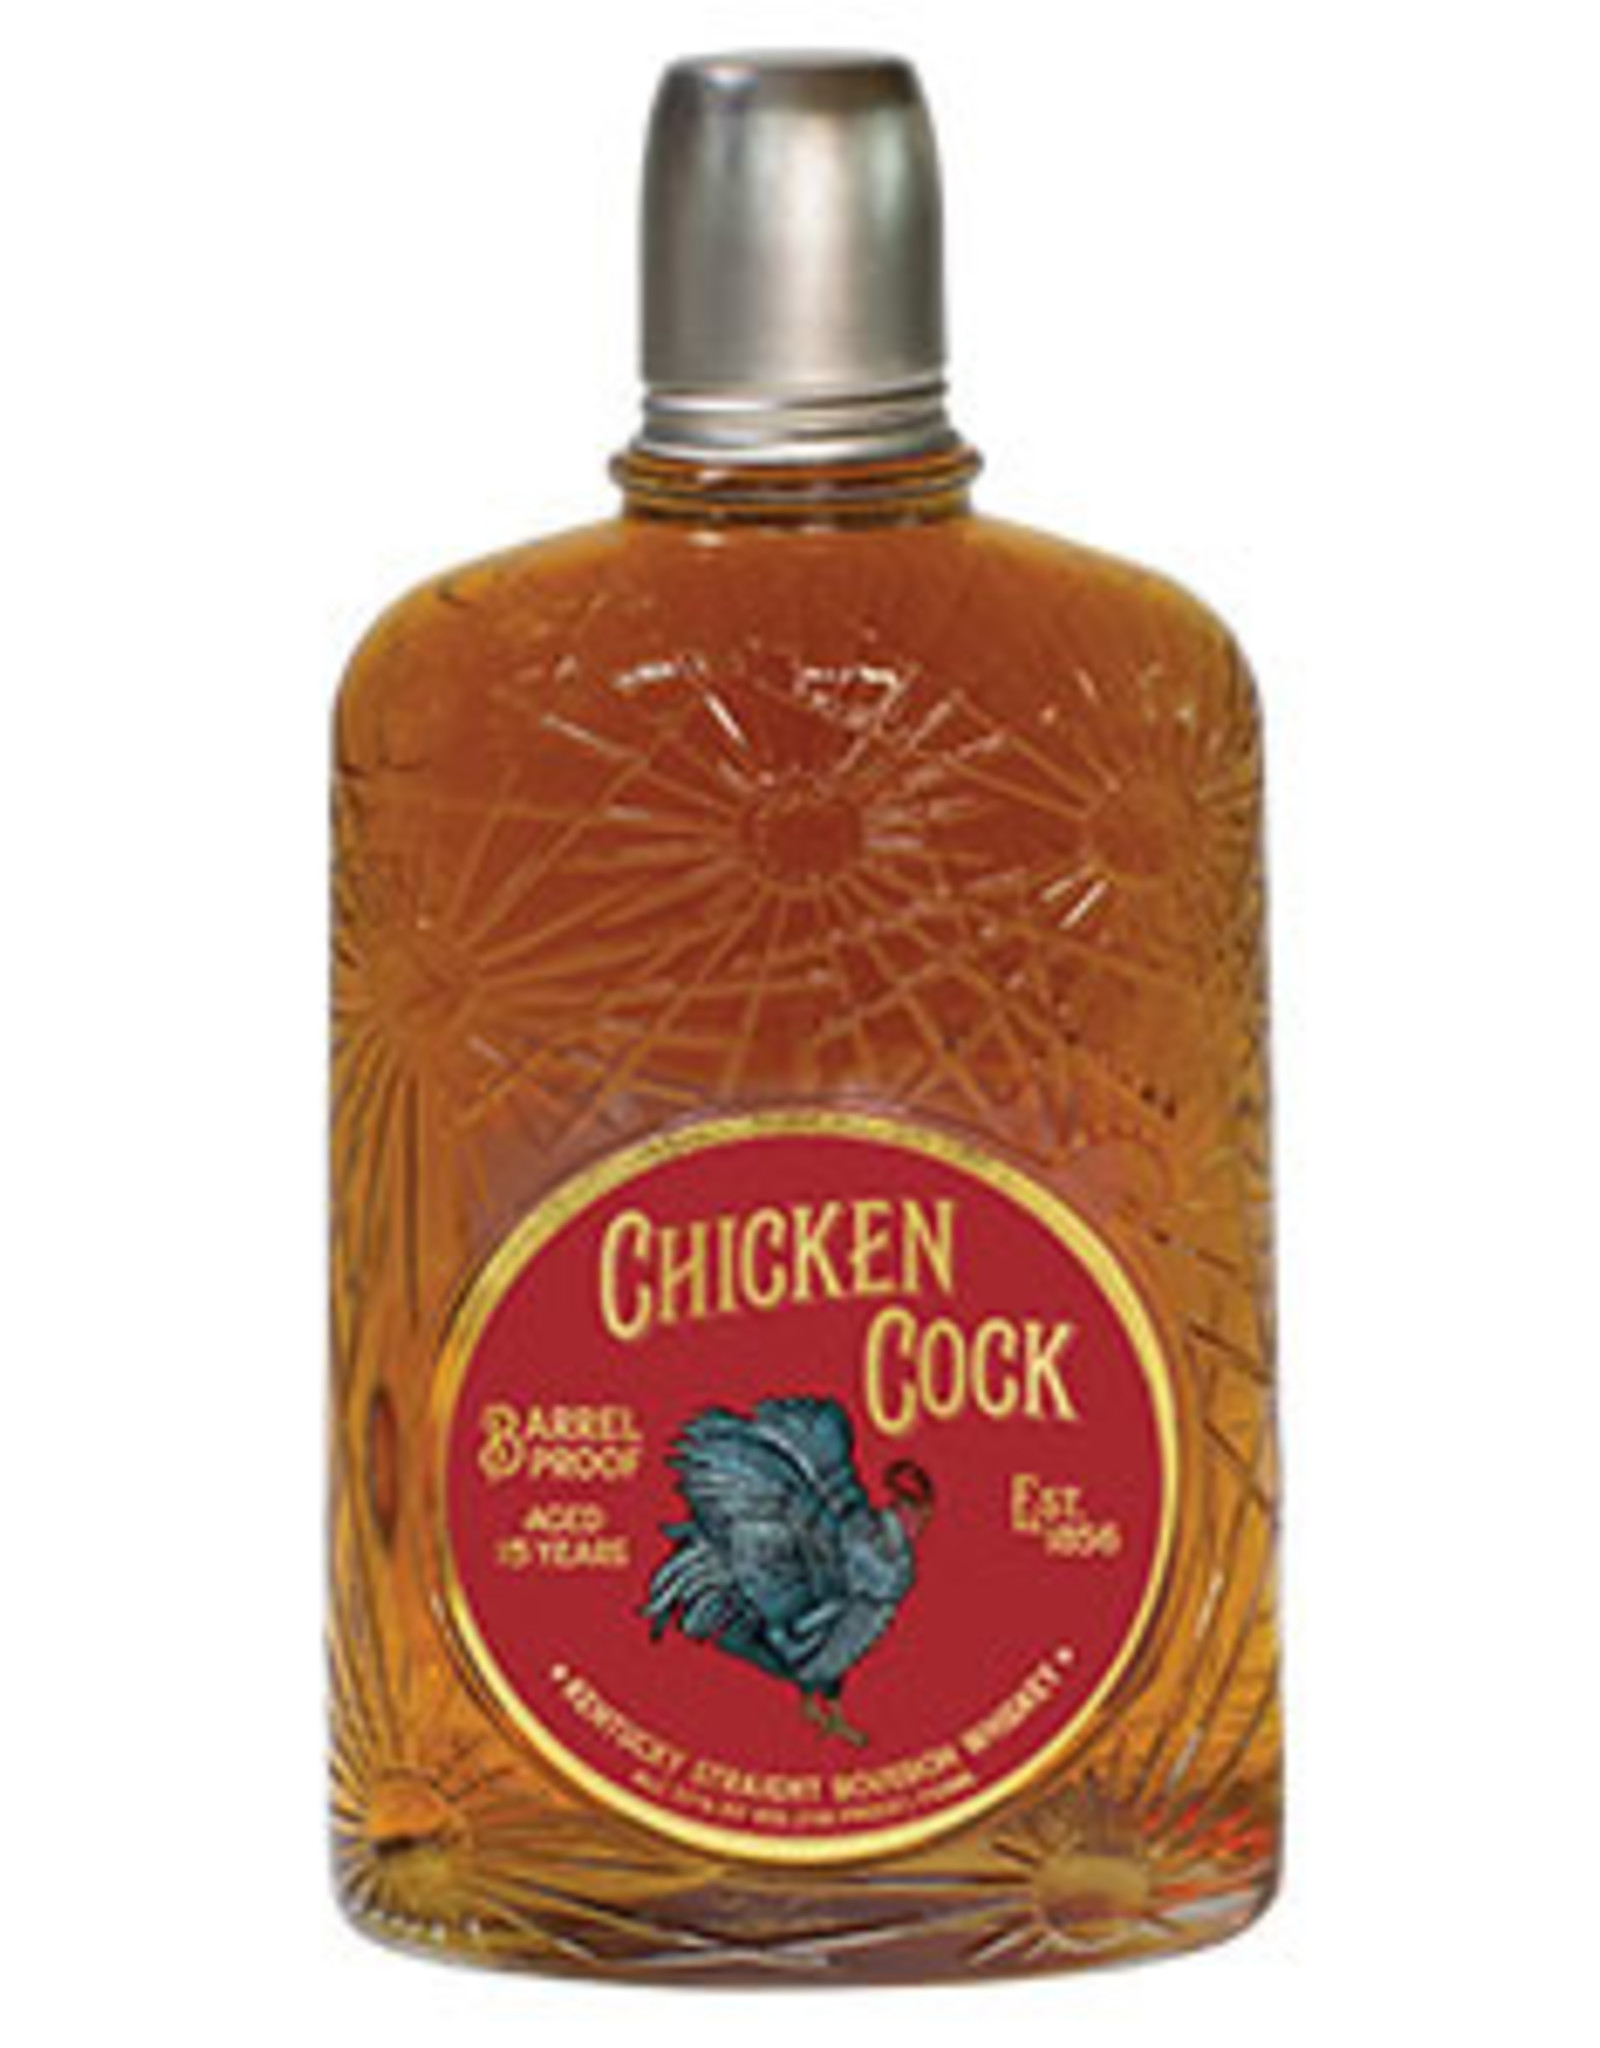 Chicken Cock Chicken Cock 15 Years